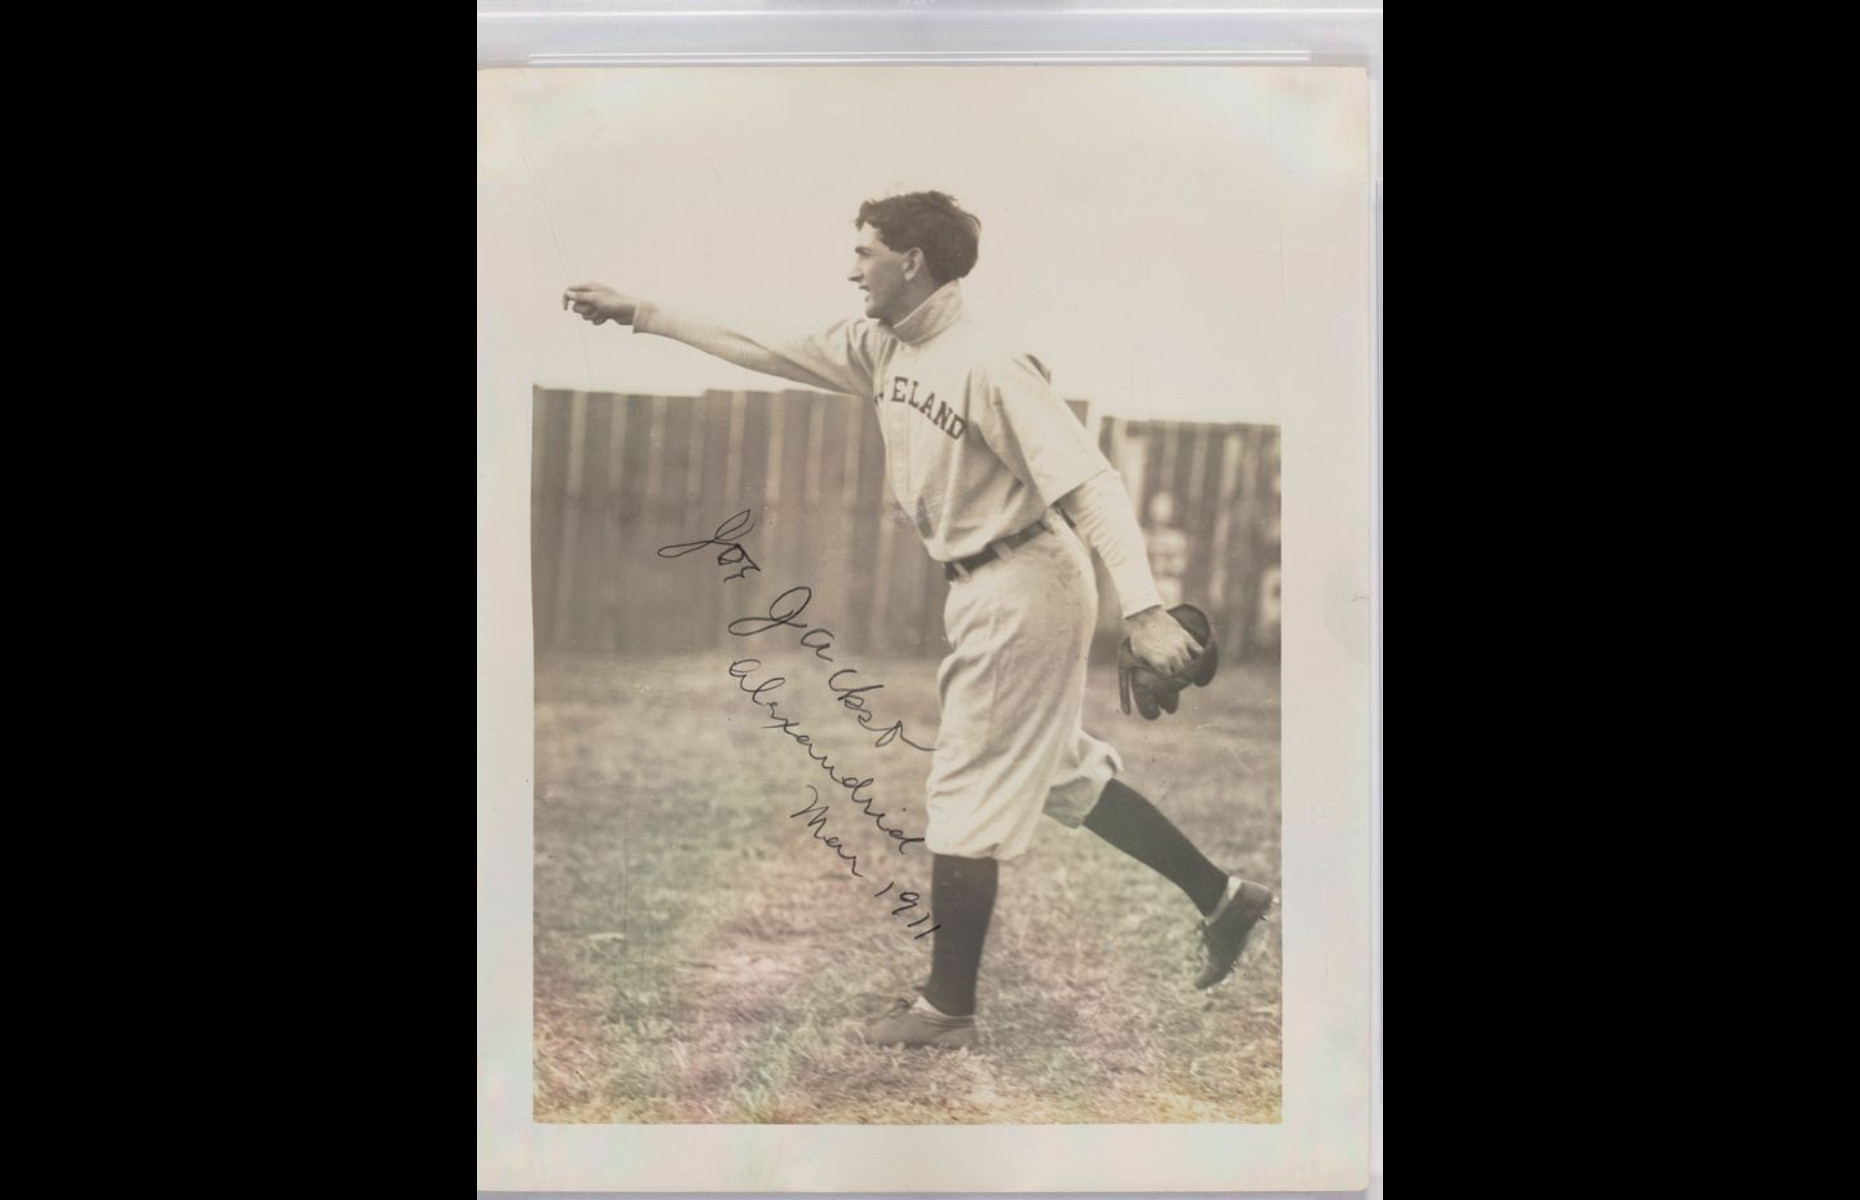 Autographed Joe Jackson baseball photograph: $1.47 million (£1.1m)